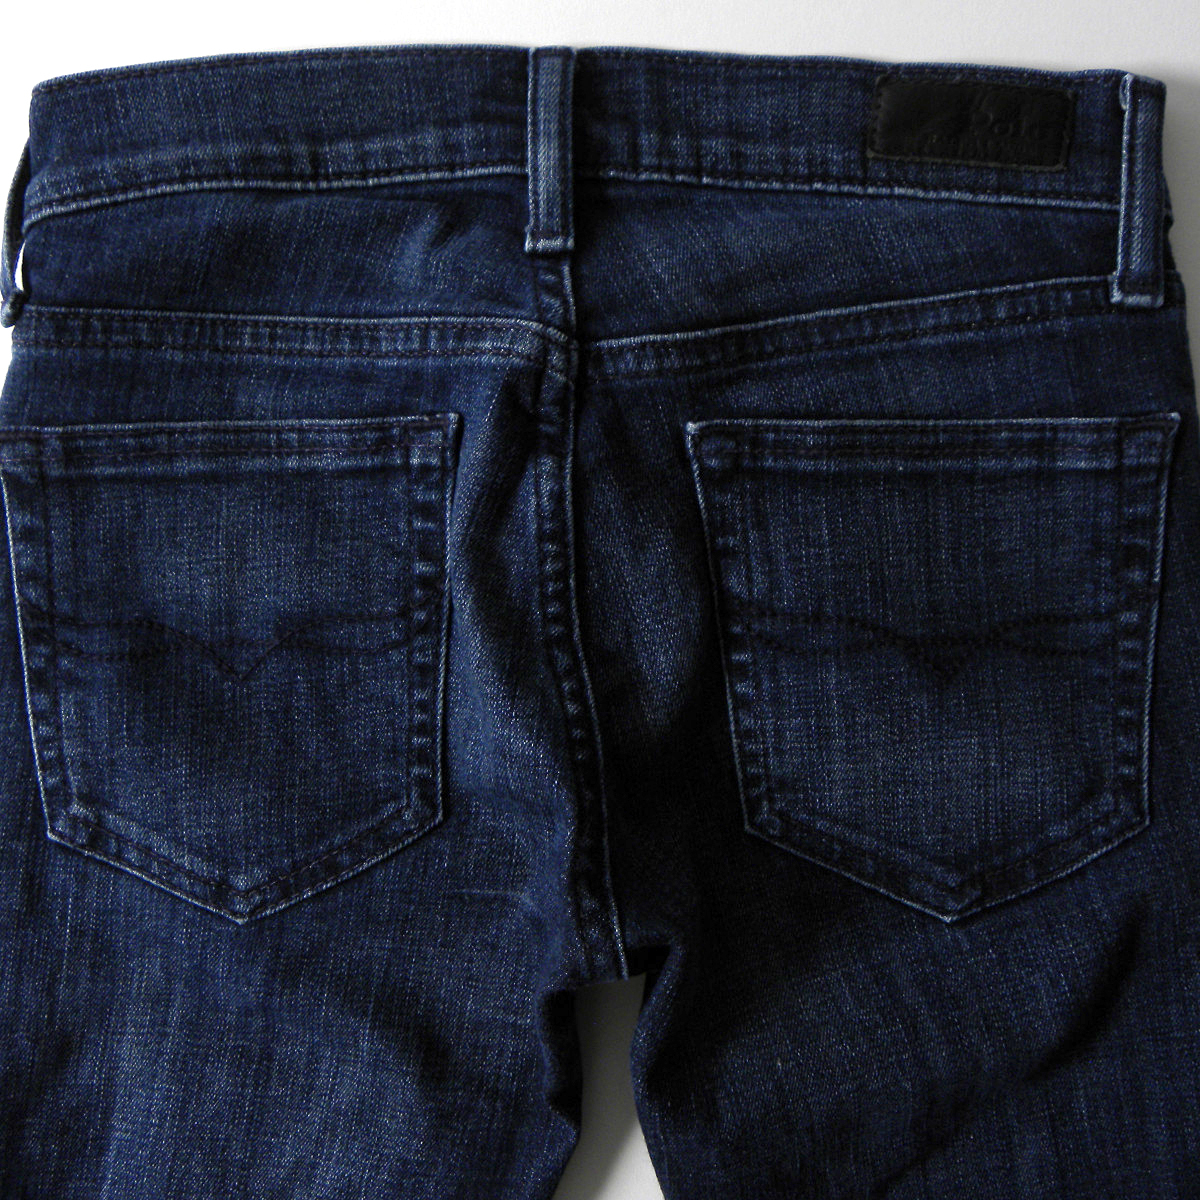  Polo Ralph Lauren Polo RALPH LAUREN slim skinny Fit jeans Denim pants W24 indigo lady's domestic regular l0705-3